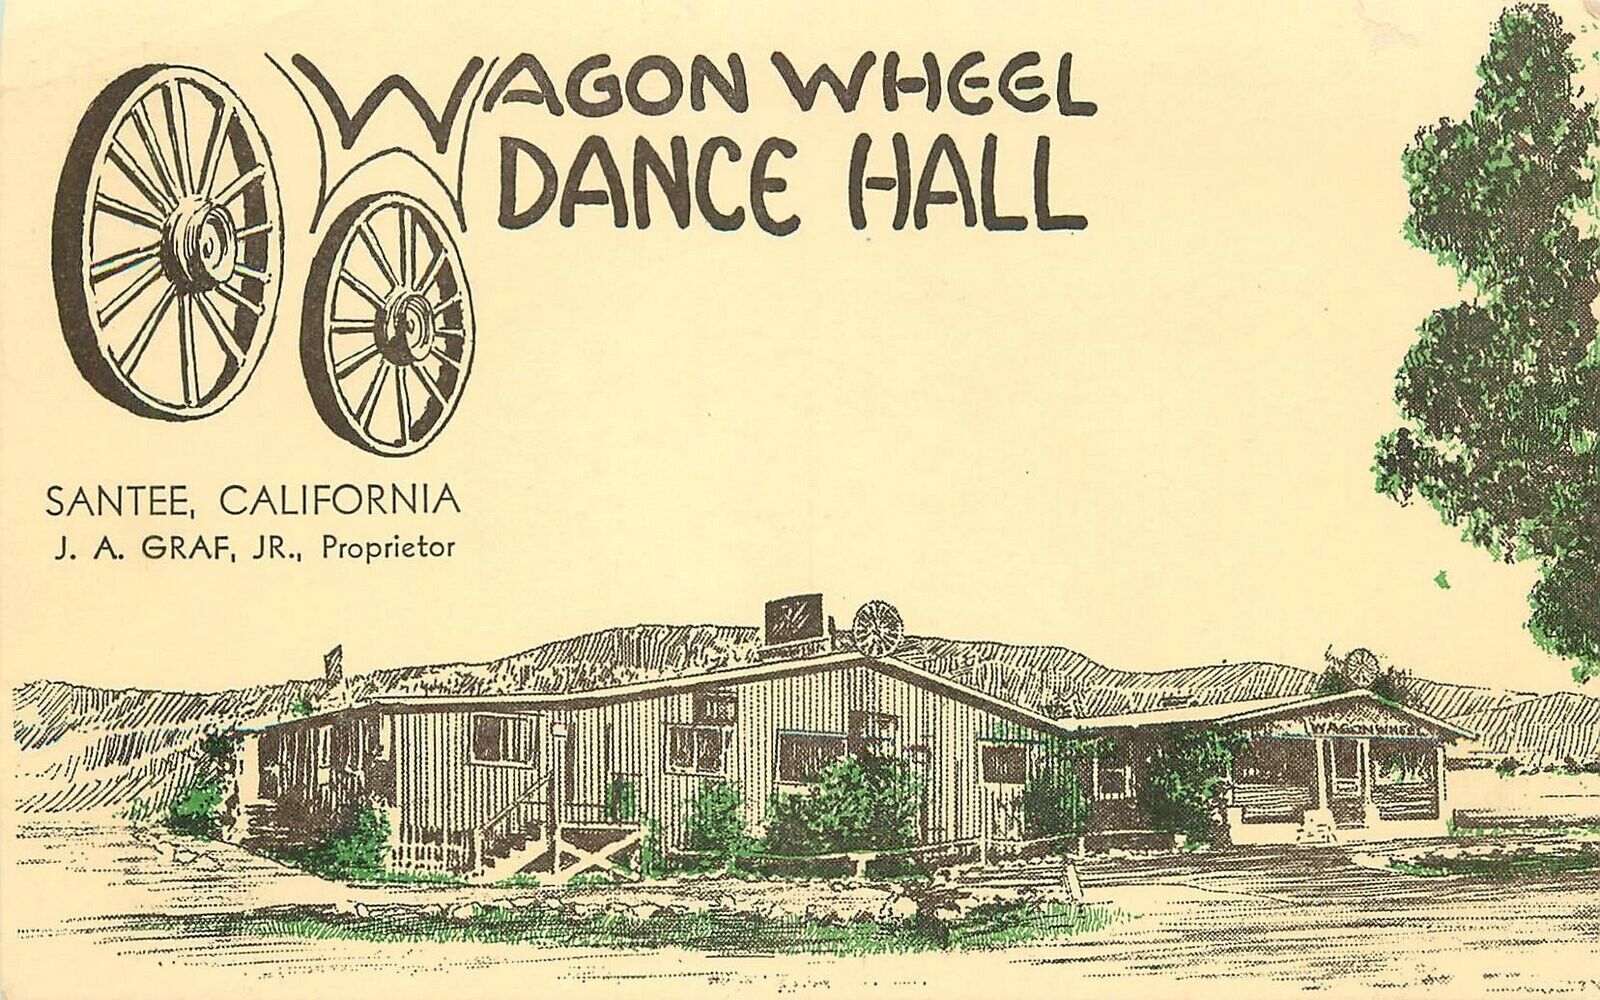 Postcard 1930s California Santee Wagon Wheel Dance Hall occupation 23-13196